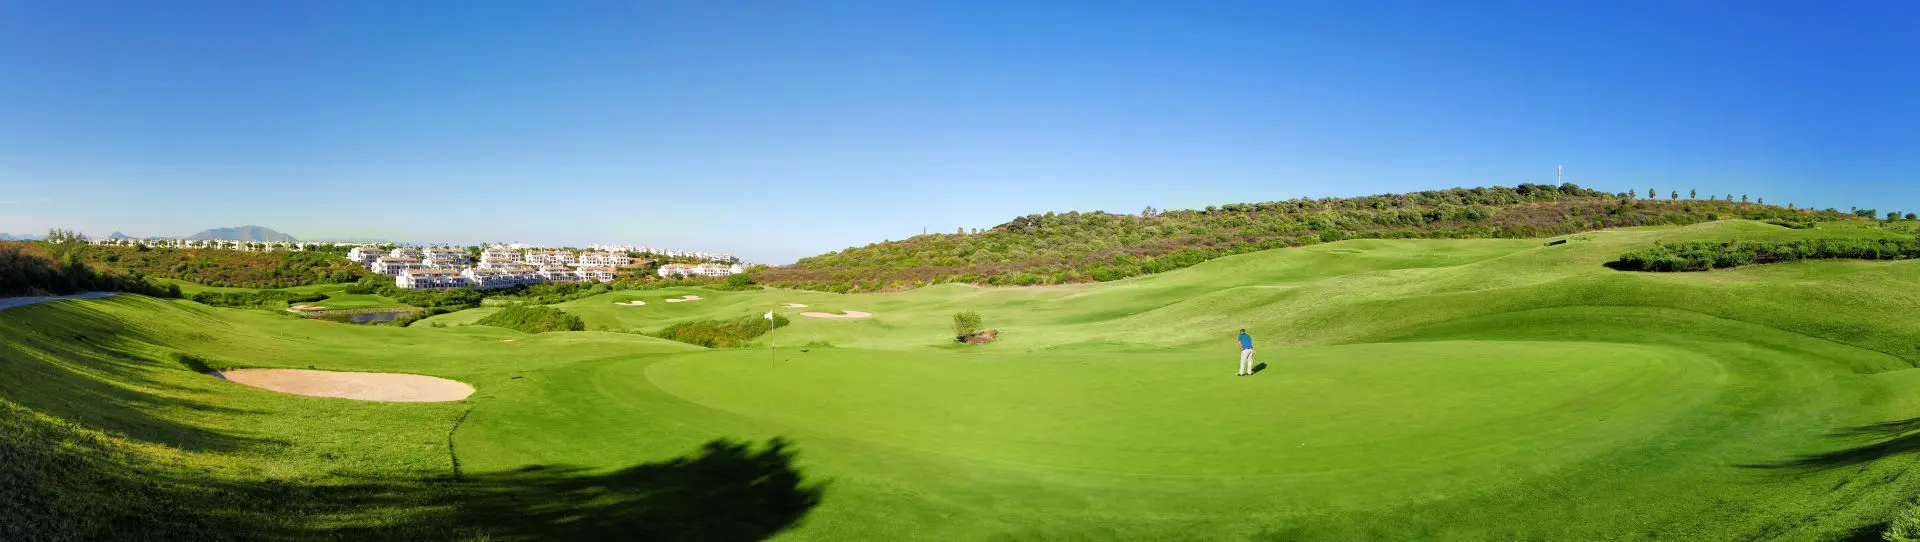 Spain Golf Driving Range - La Hacienda Alcaidesa Links Golf Resort Academy - Photo 3